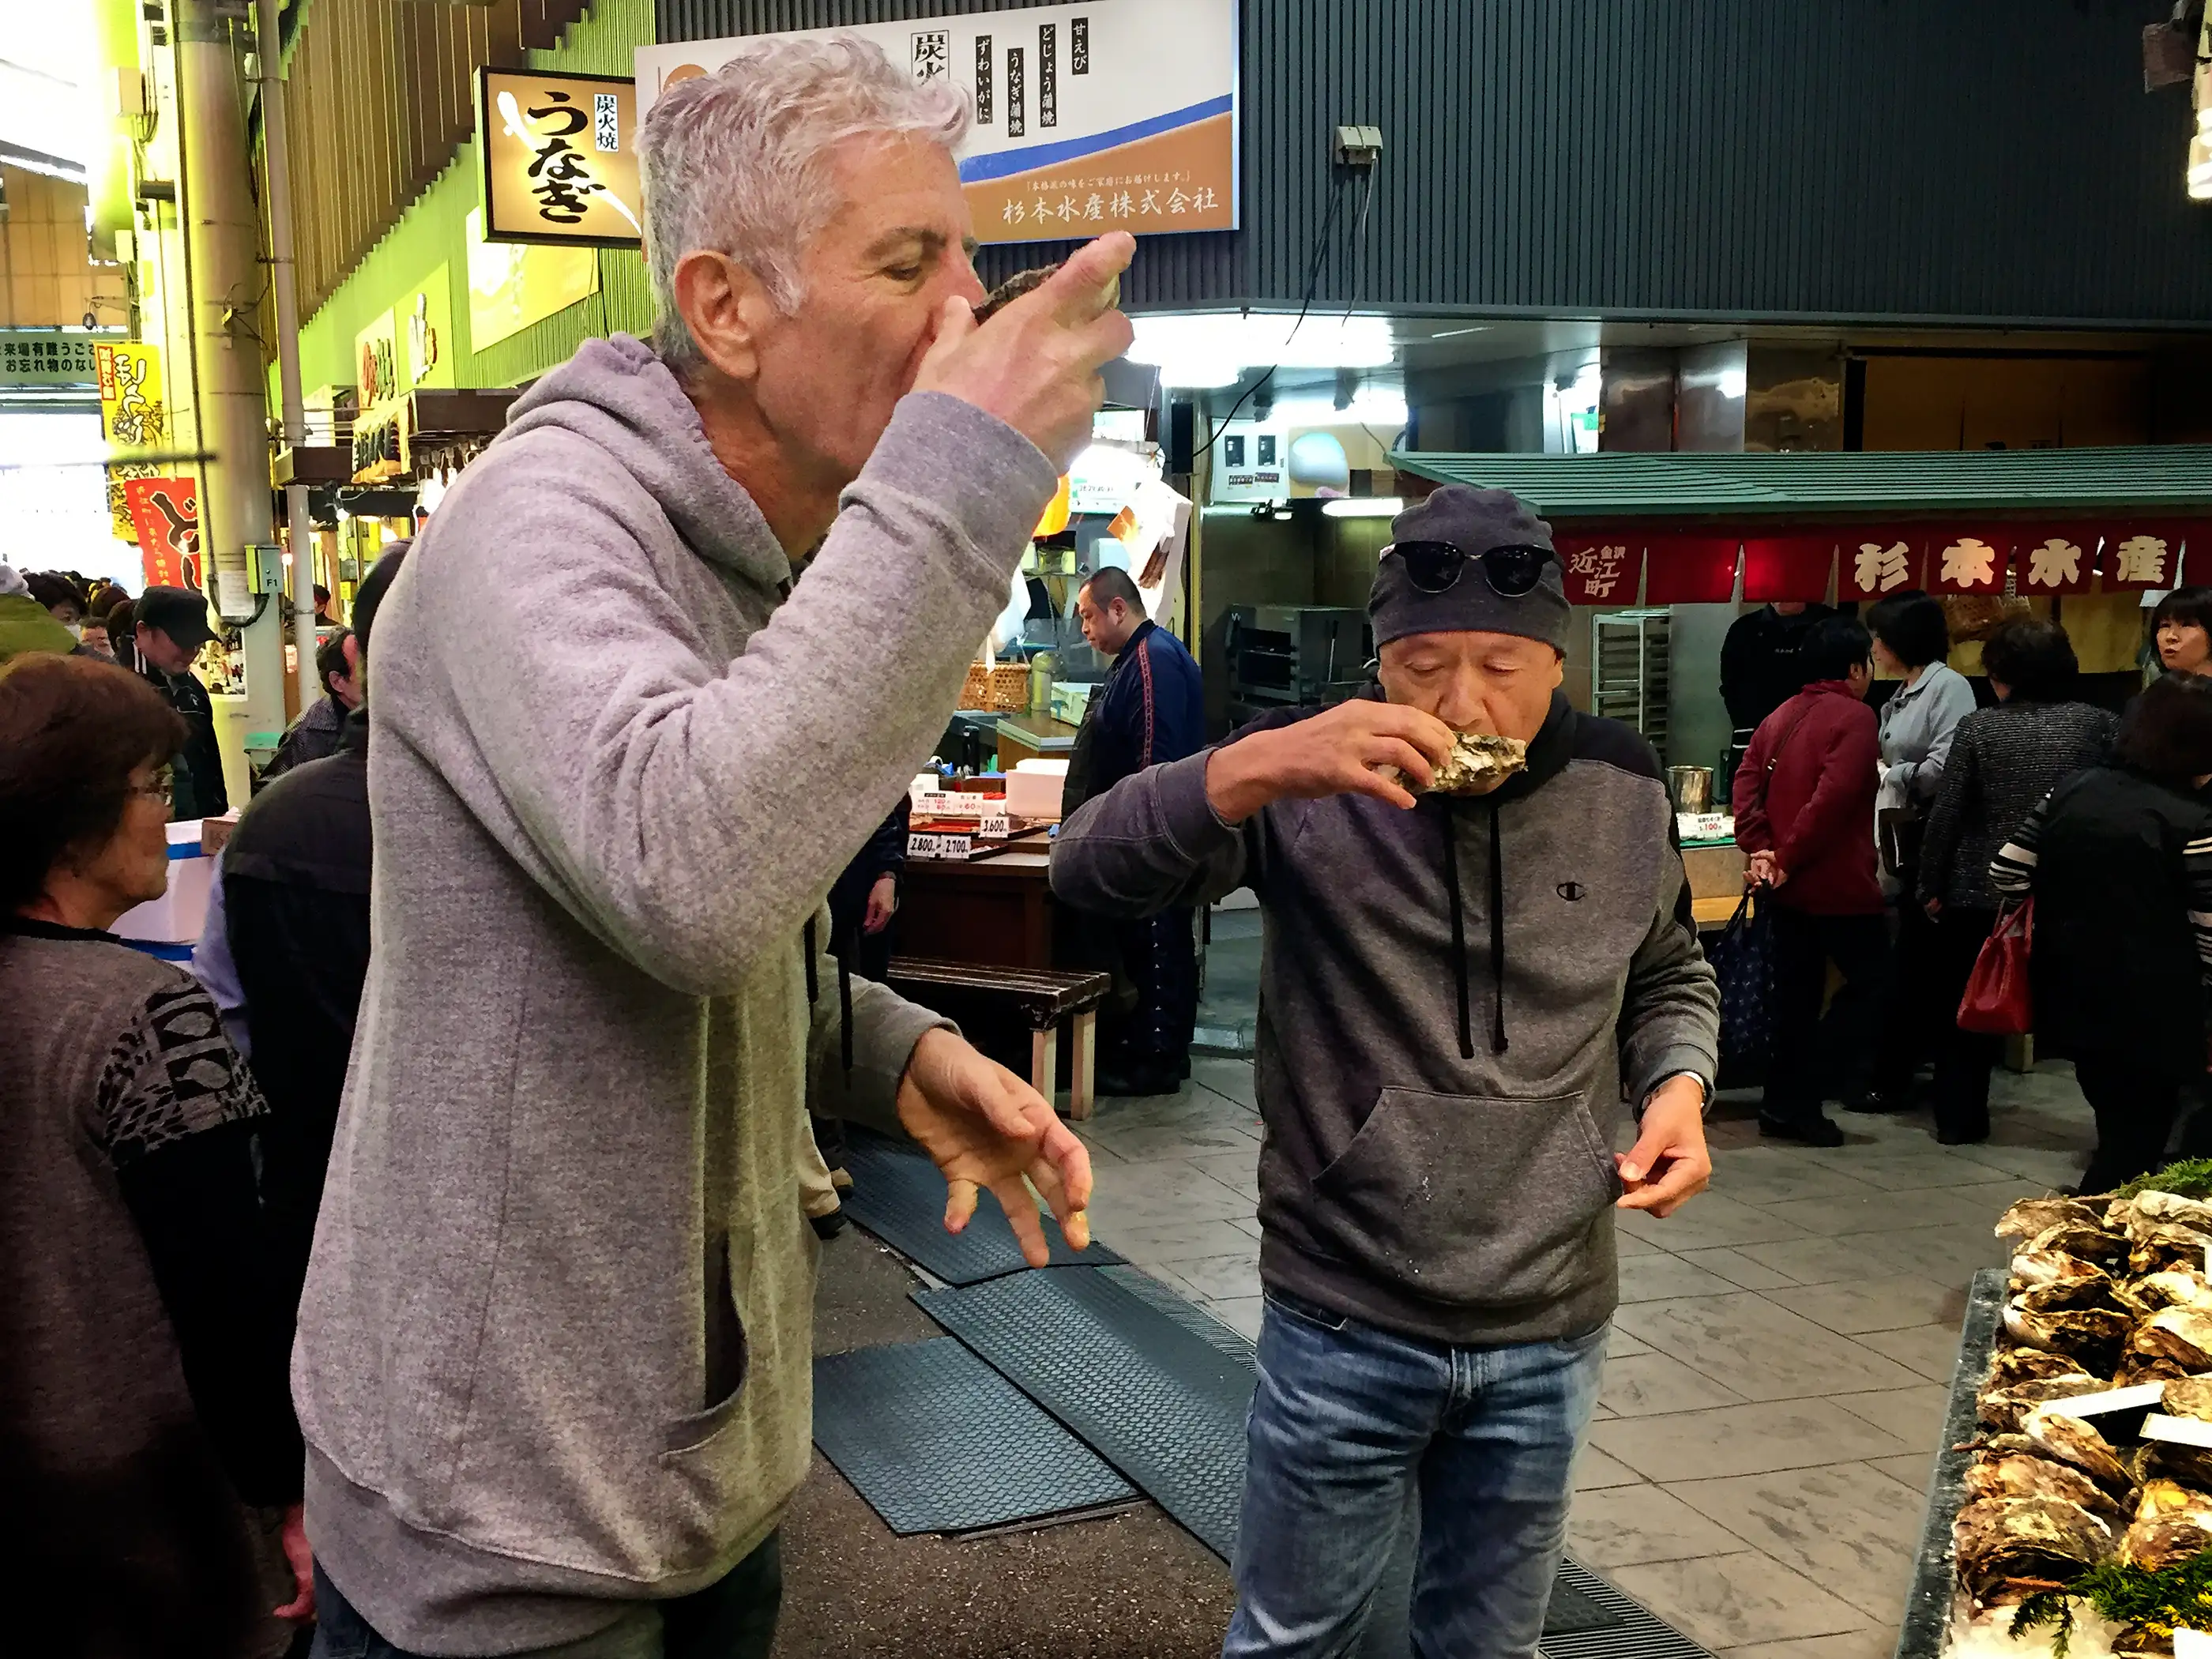 Anthony Bourdain and chef Masa Takayama sample oysters in the streets of Kanazawa, Japan.